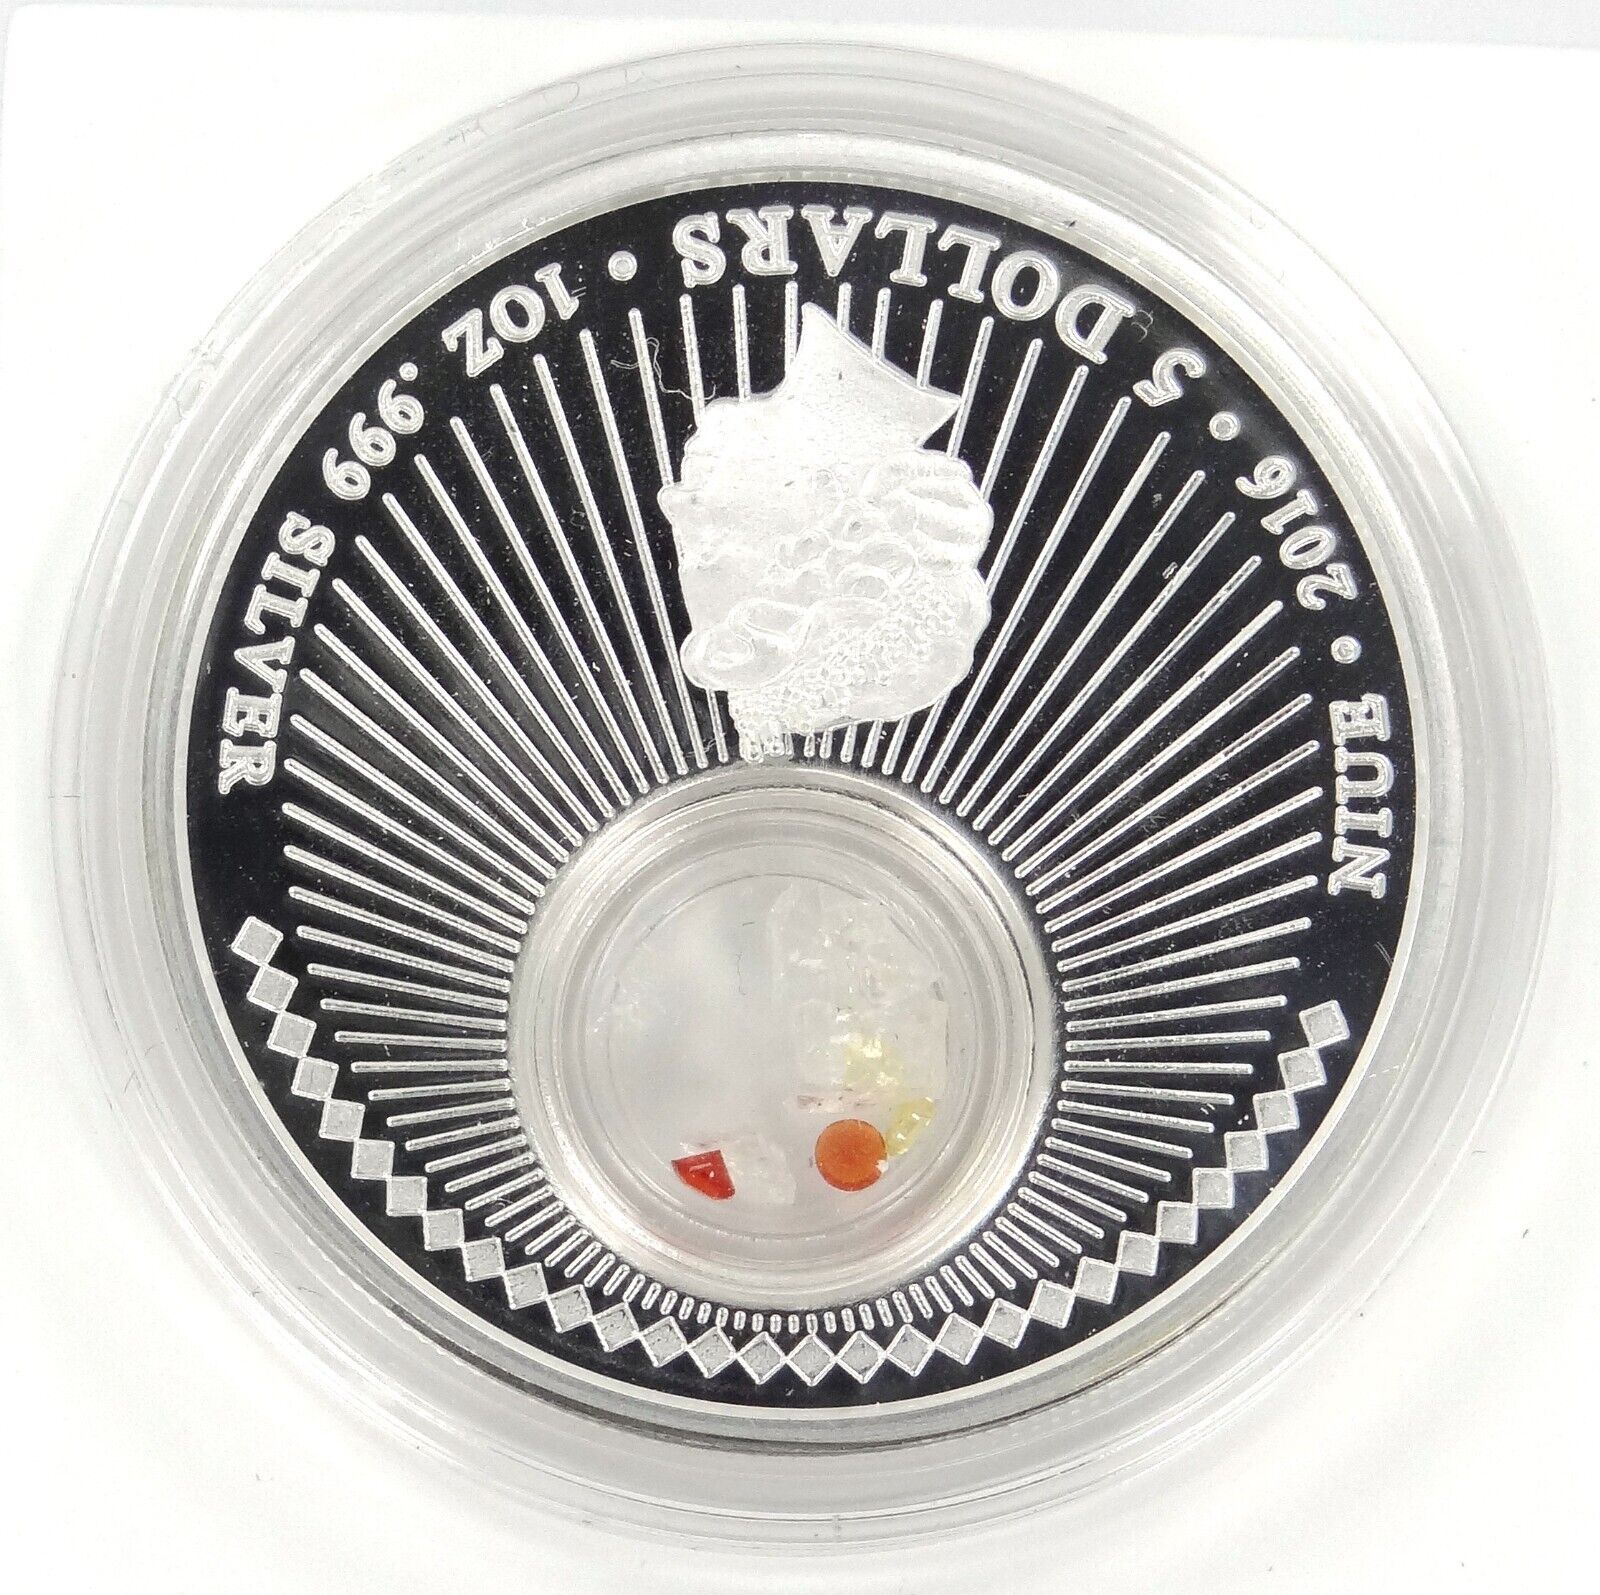 1 Oz Silver Coin 2016 Niue $5 Solar System with transparent capsule meteor glass-classypw.com-2